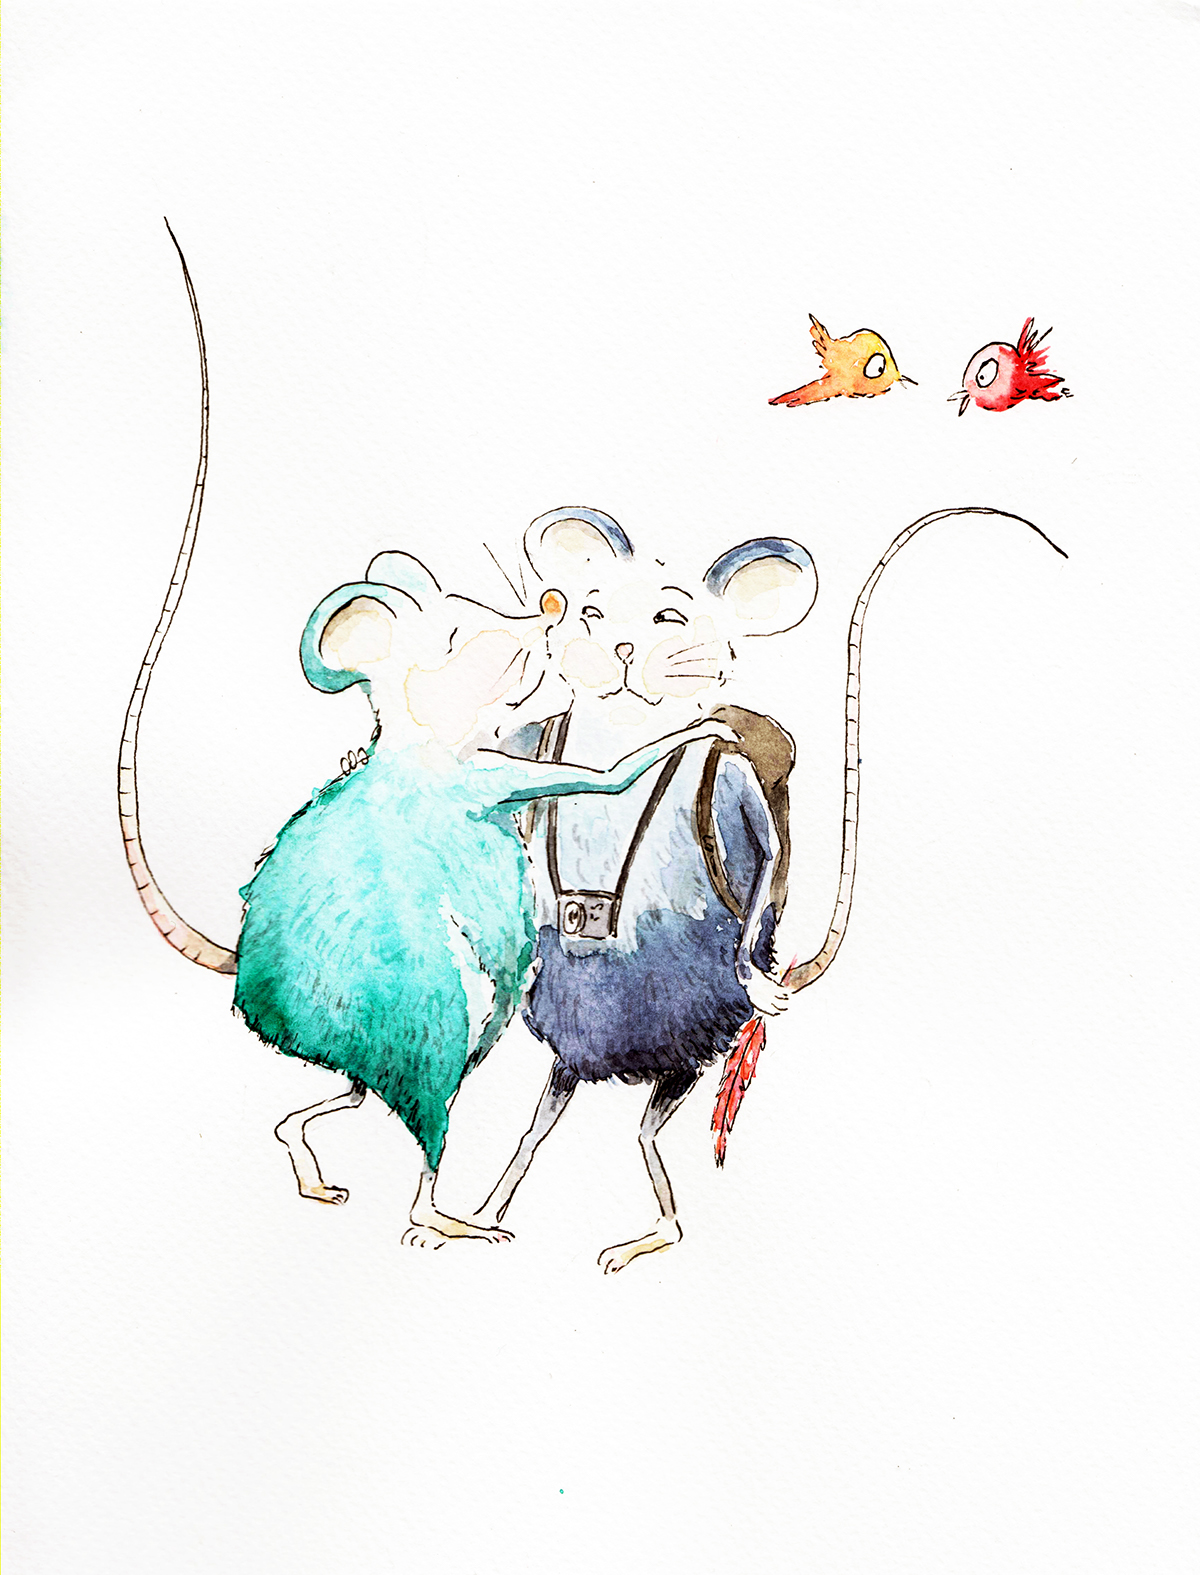 Rats rat adventure Love Travel fight